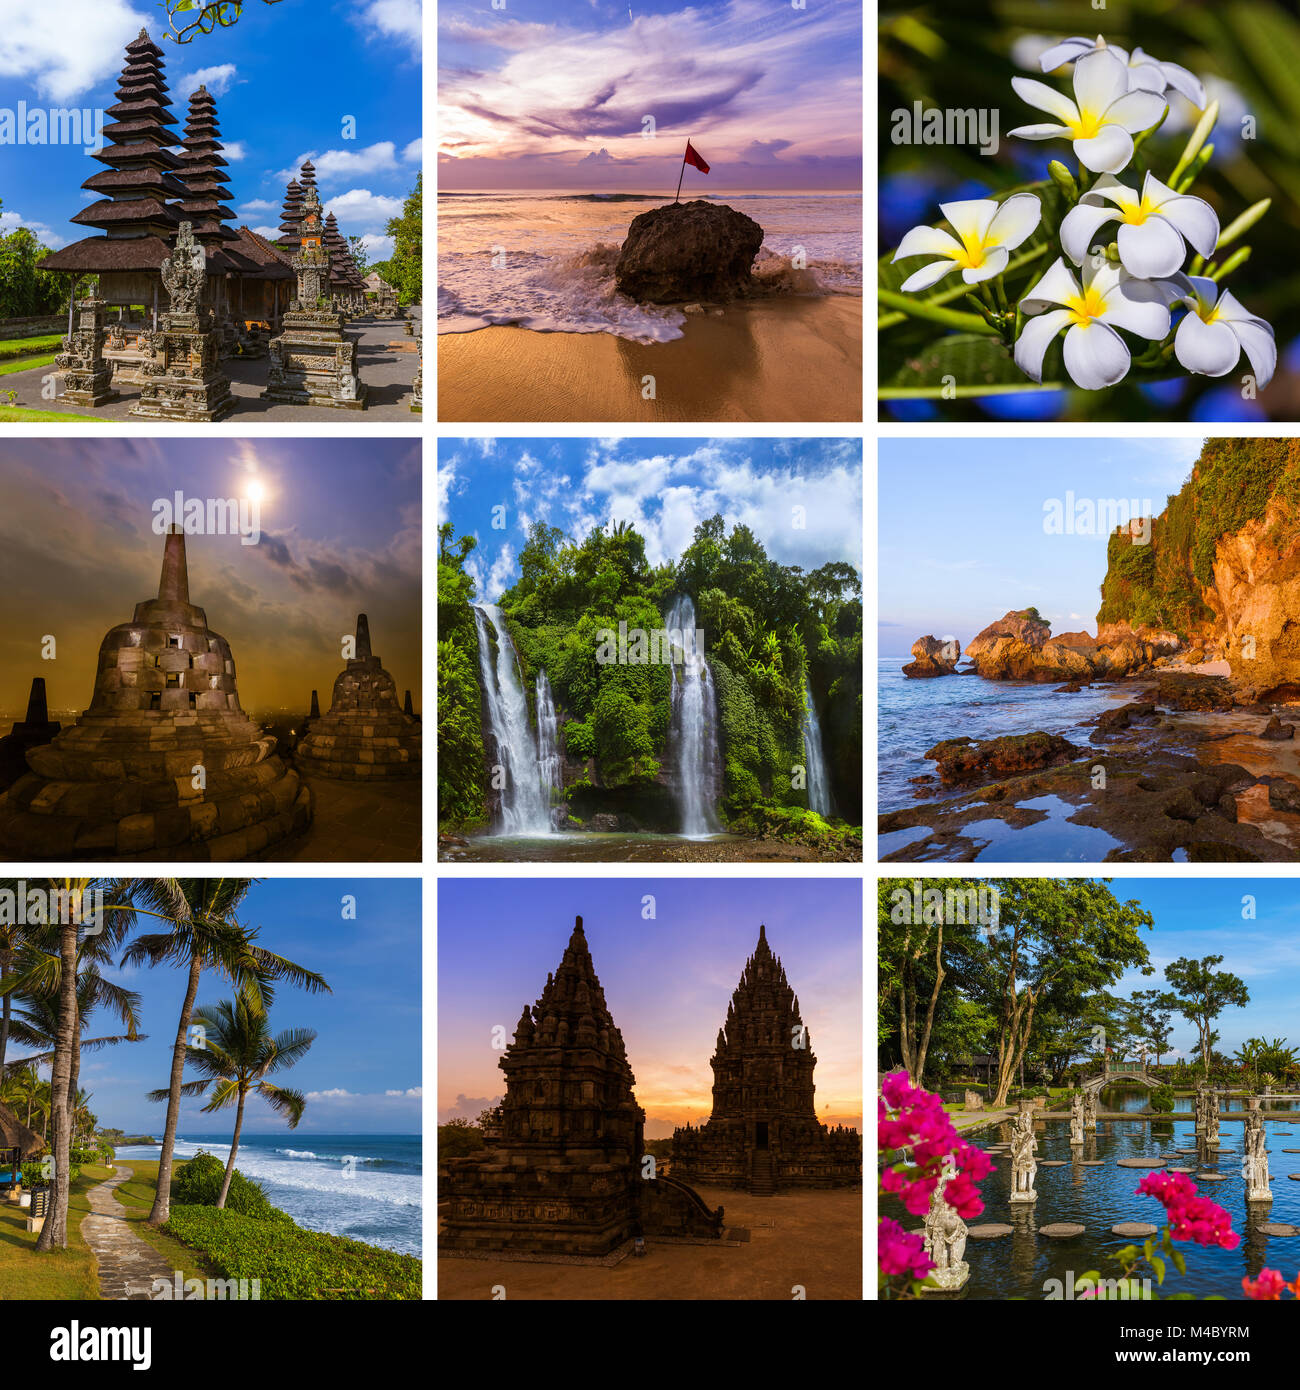 Indonesia travel bali Top 10